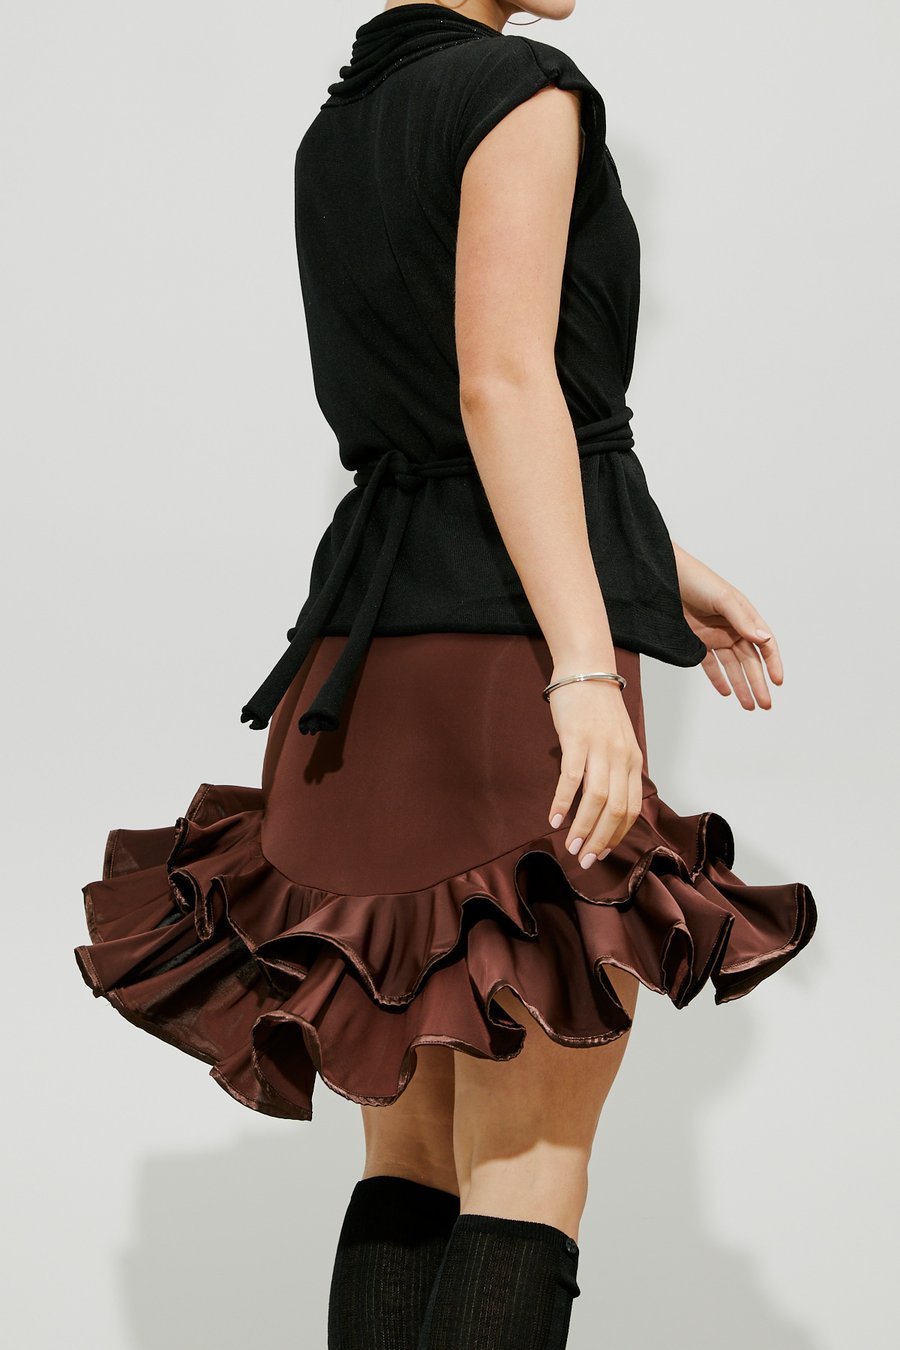 Image of Frill Skirt - Chocolate (J6664) Dancewear latin ballroom